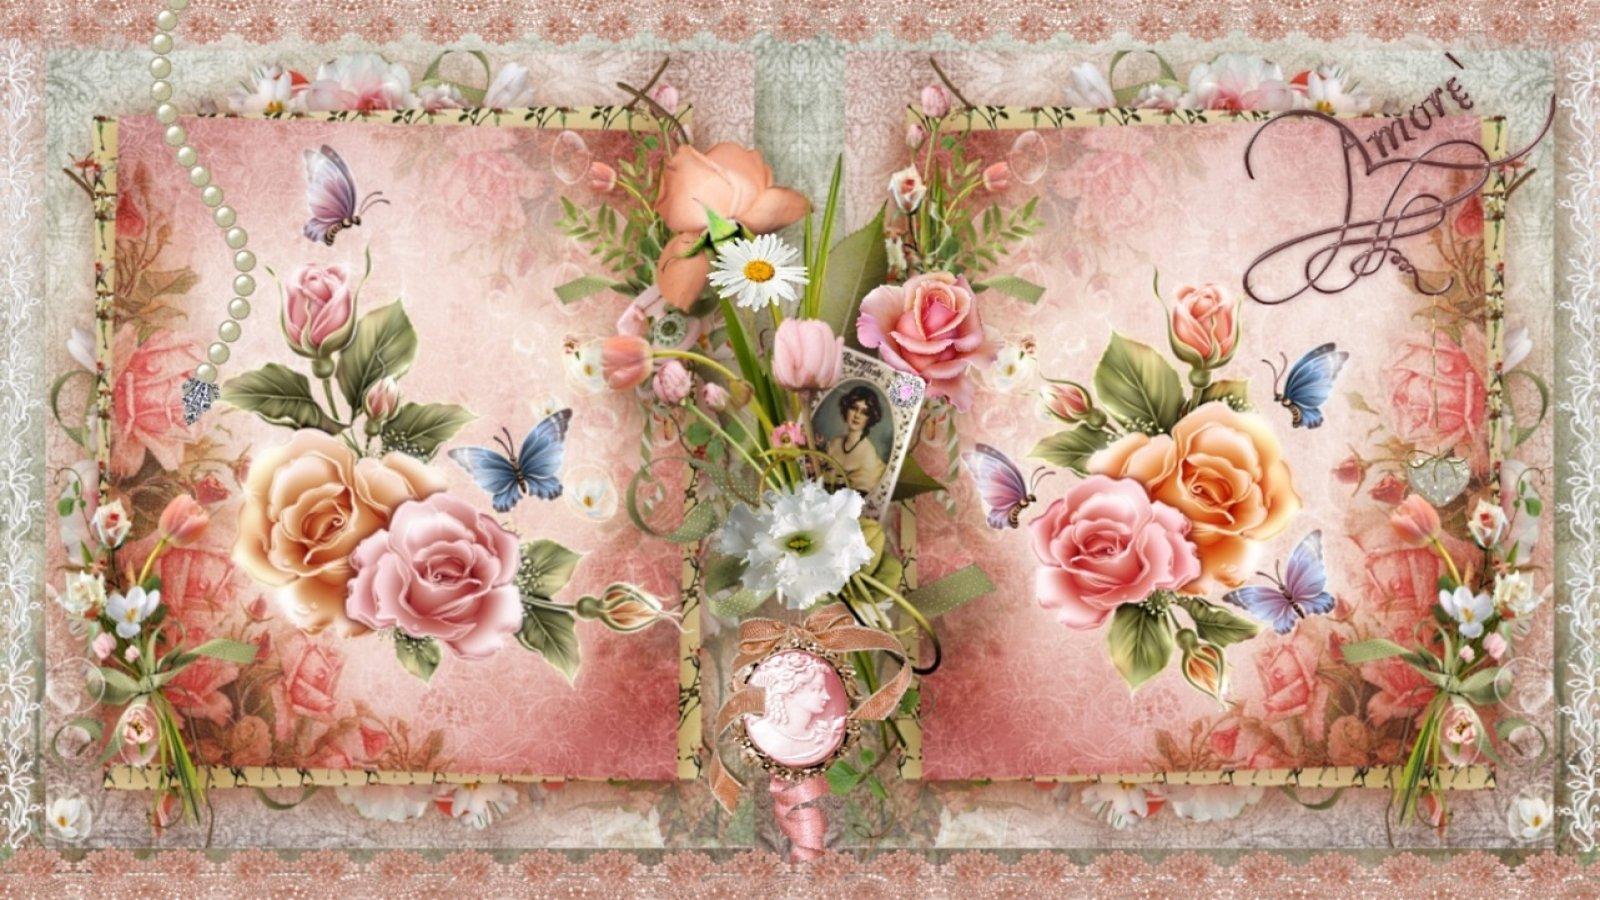 Vintage Flower Art Wallpaper and Background Imagex900